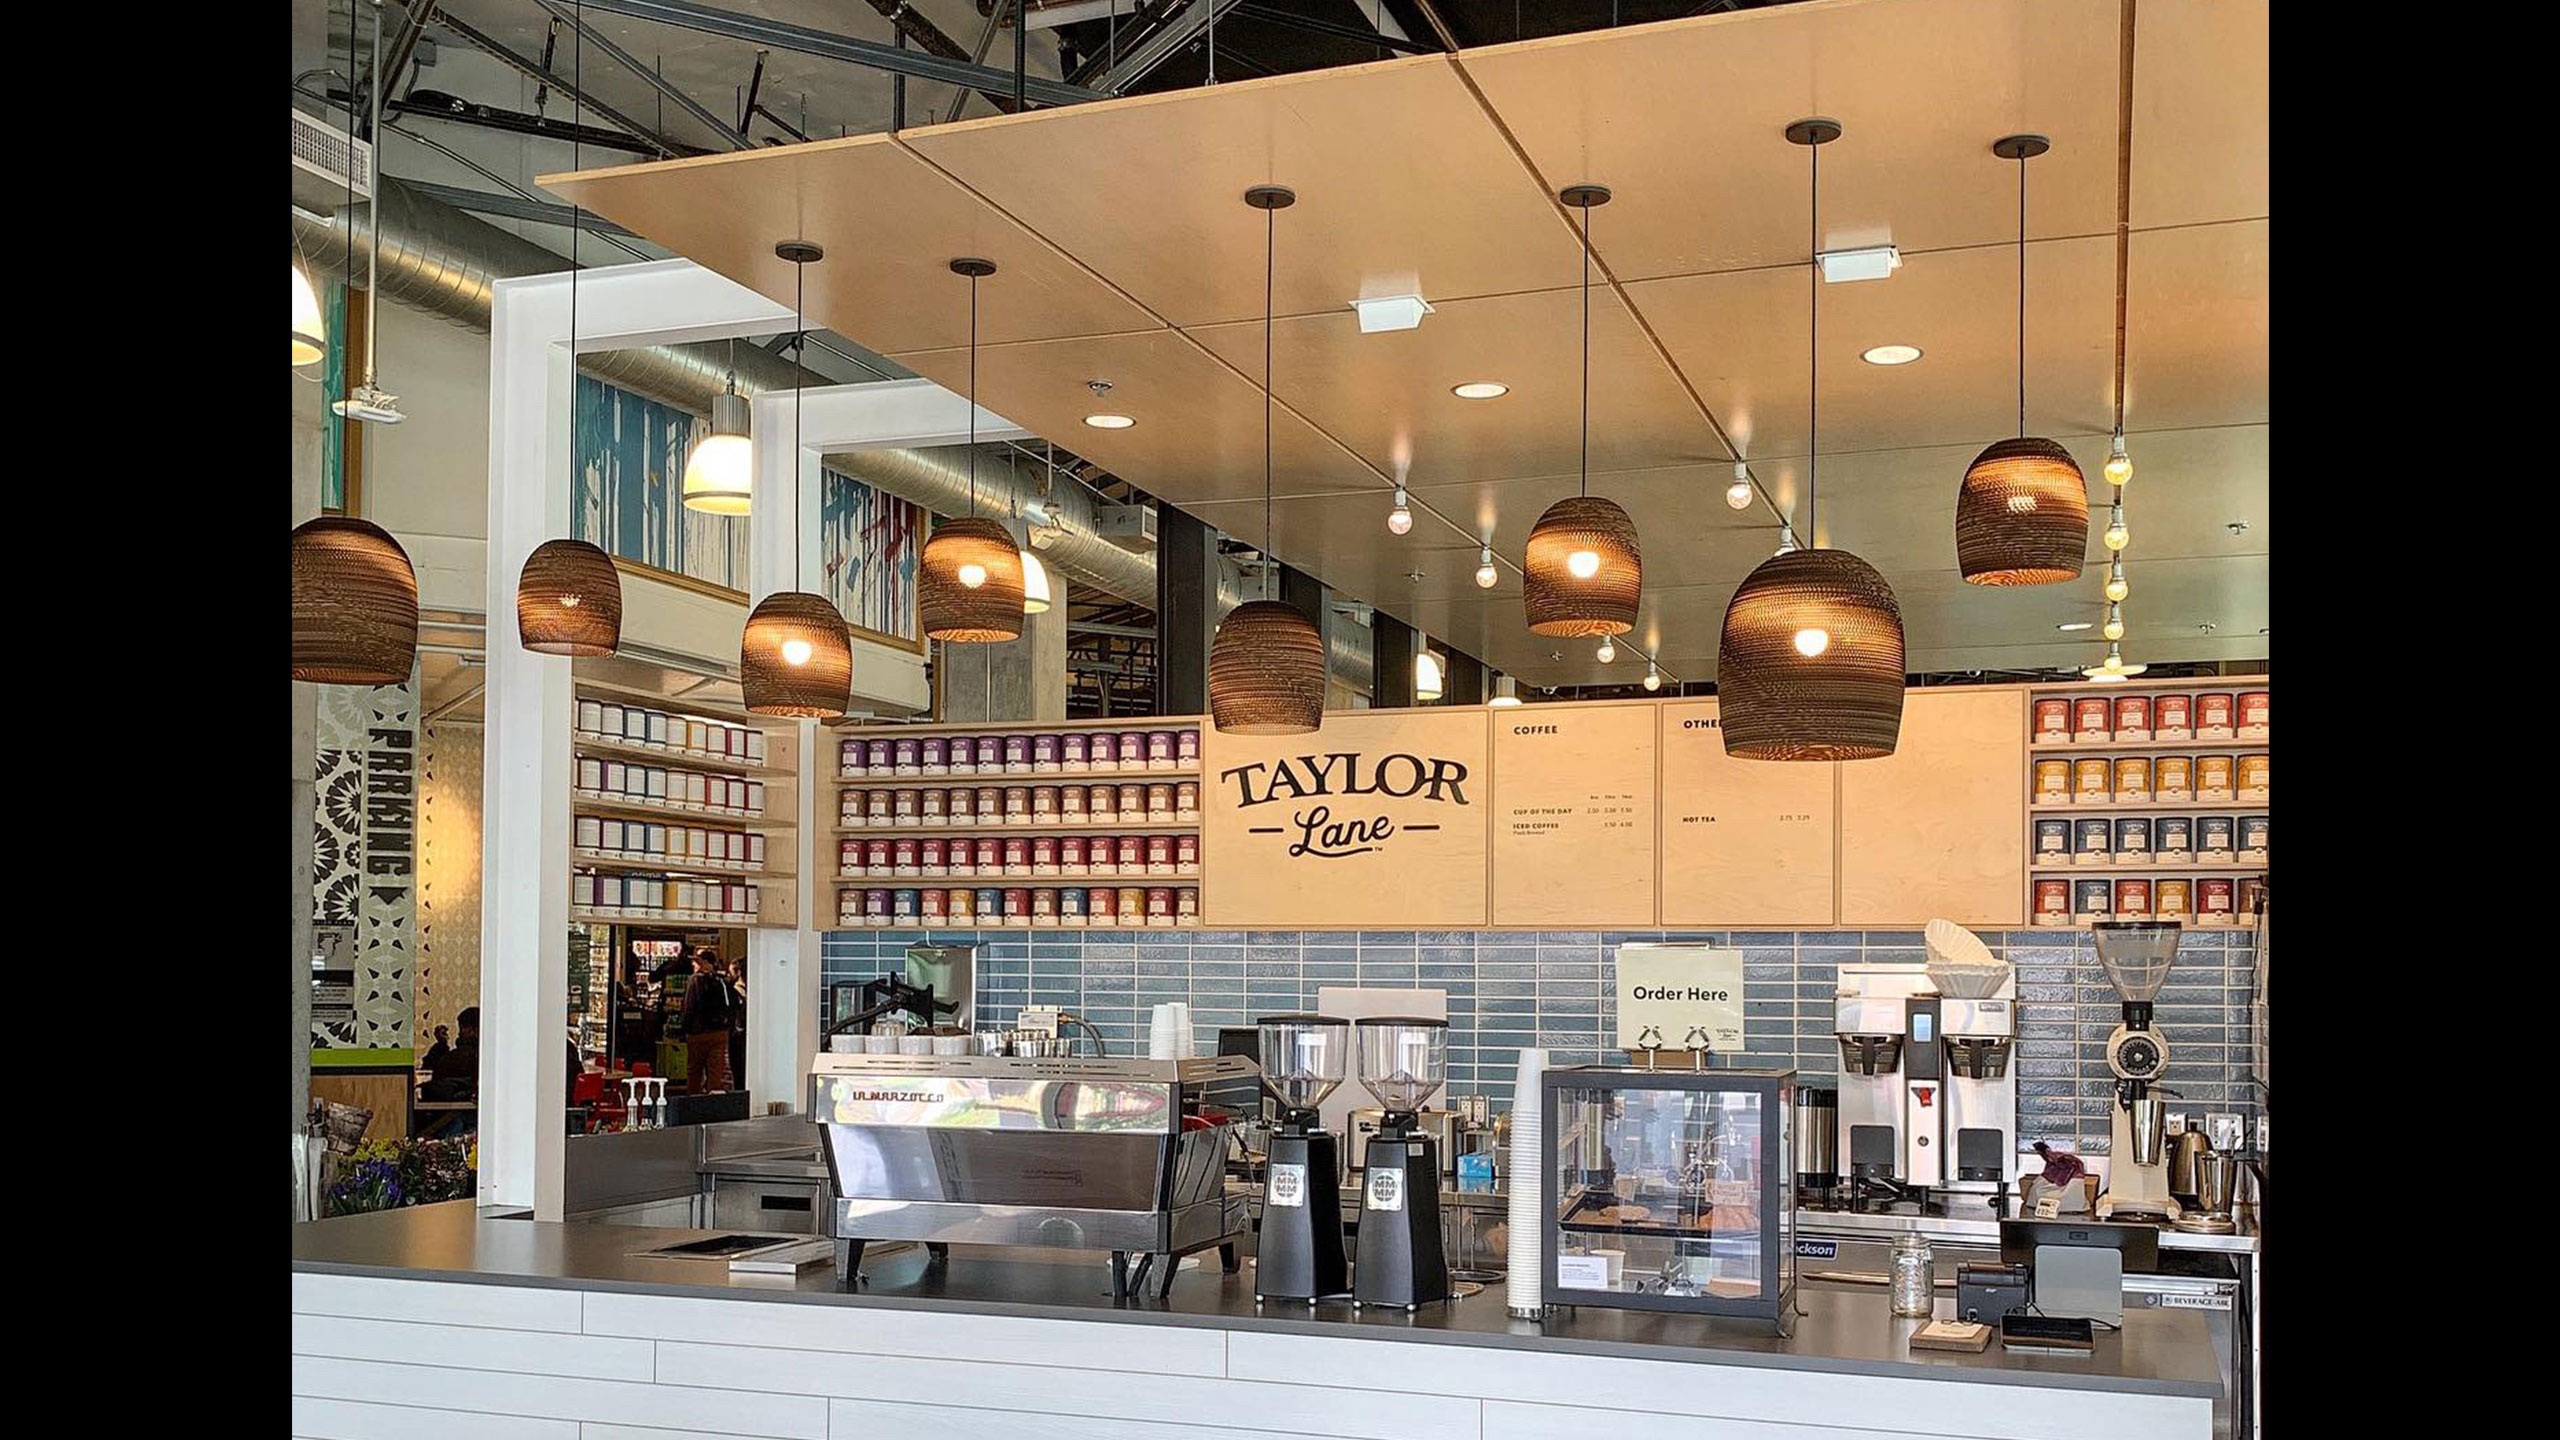 Coffee-Shop-Design-Taylor-Lane-2-Coffee-Counter-grey-countertop-white-tile